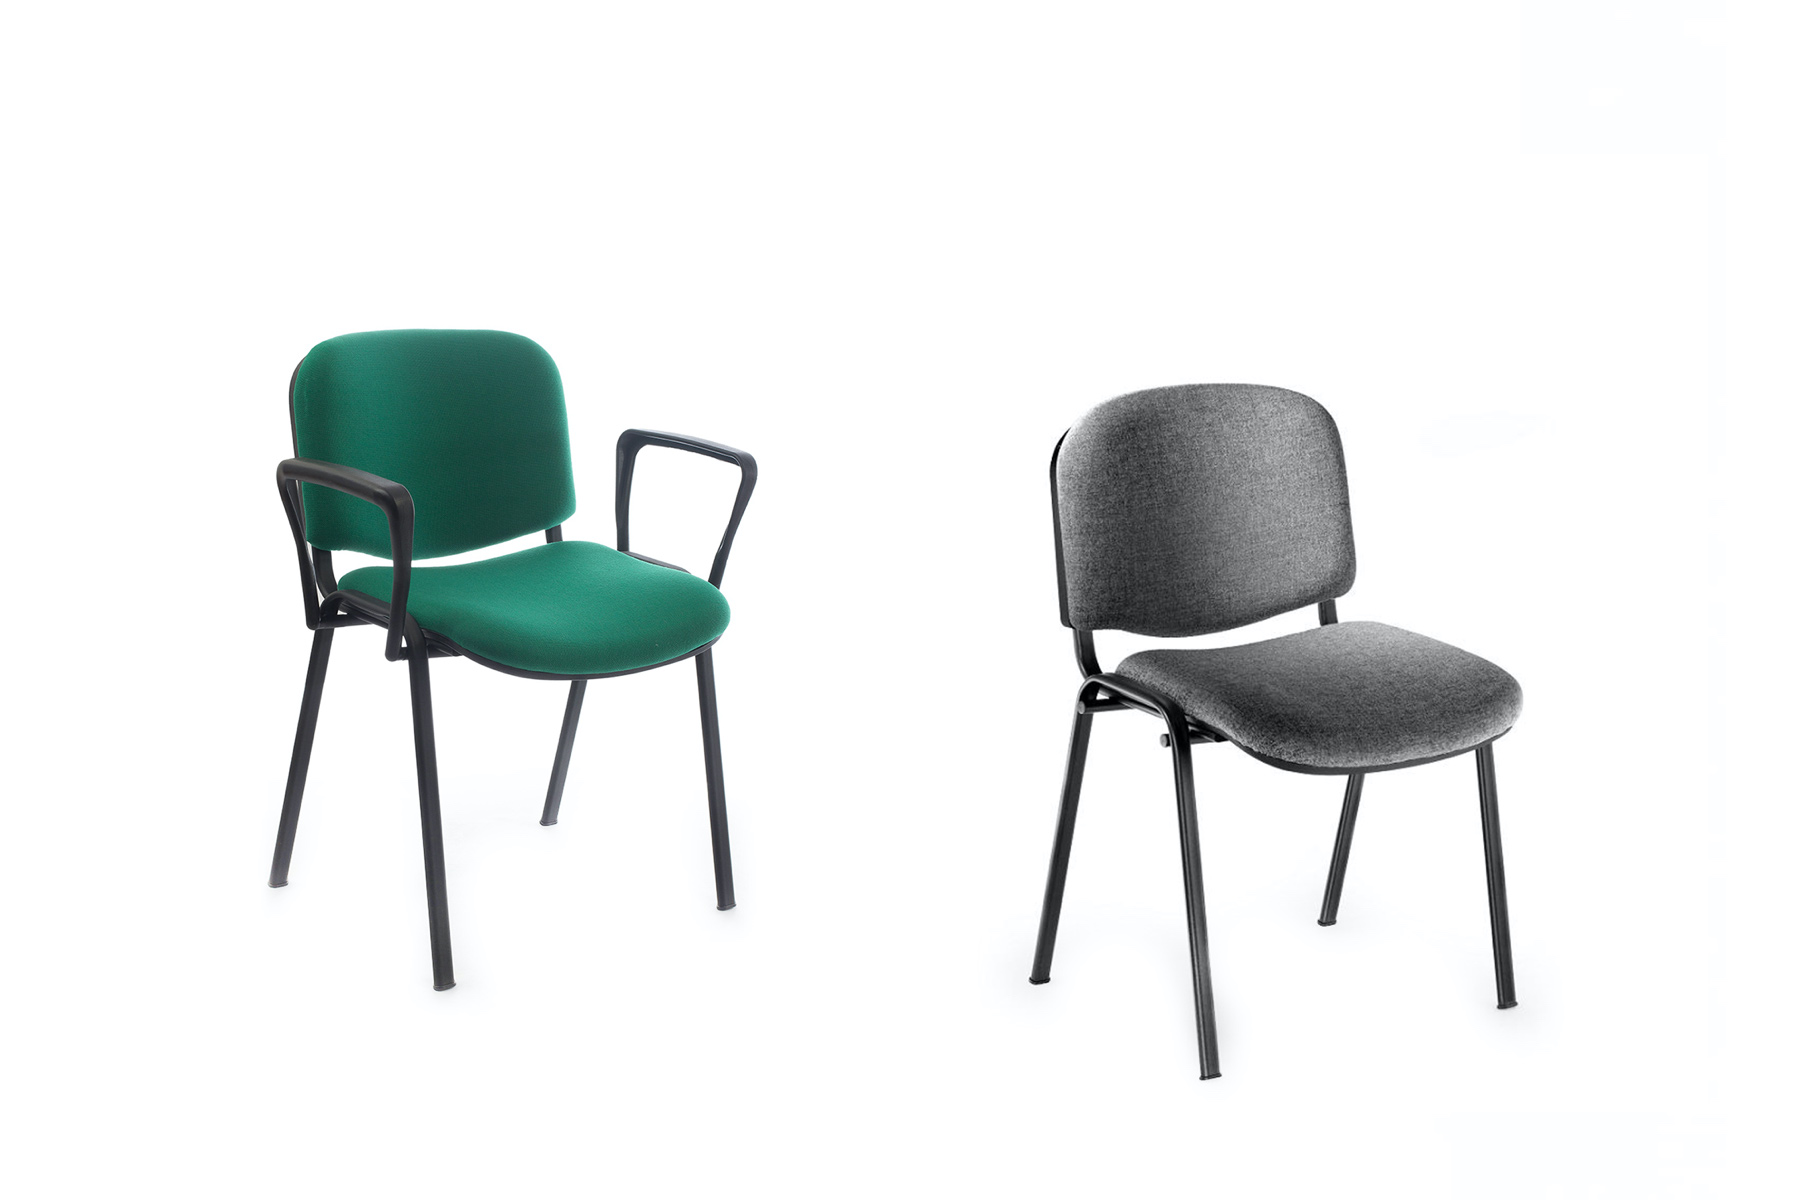 Quattro proposte di sedie per sale d’attesa